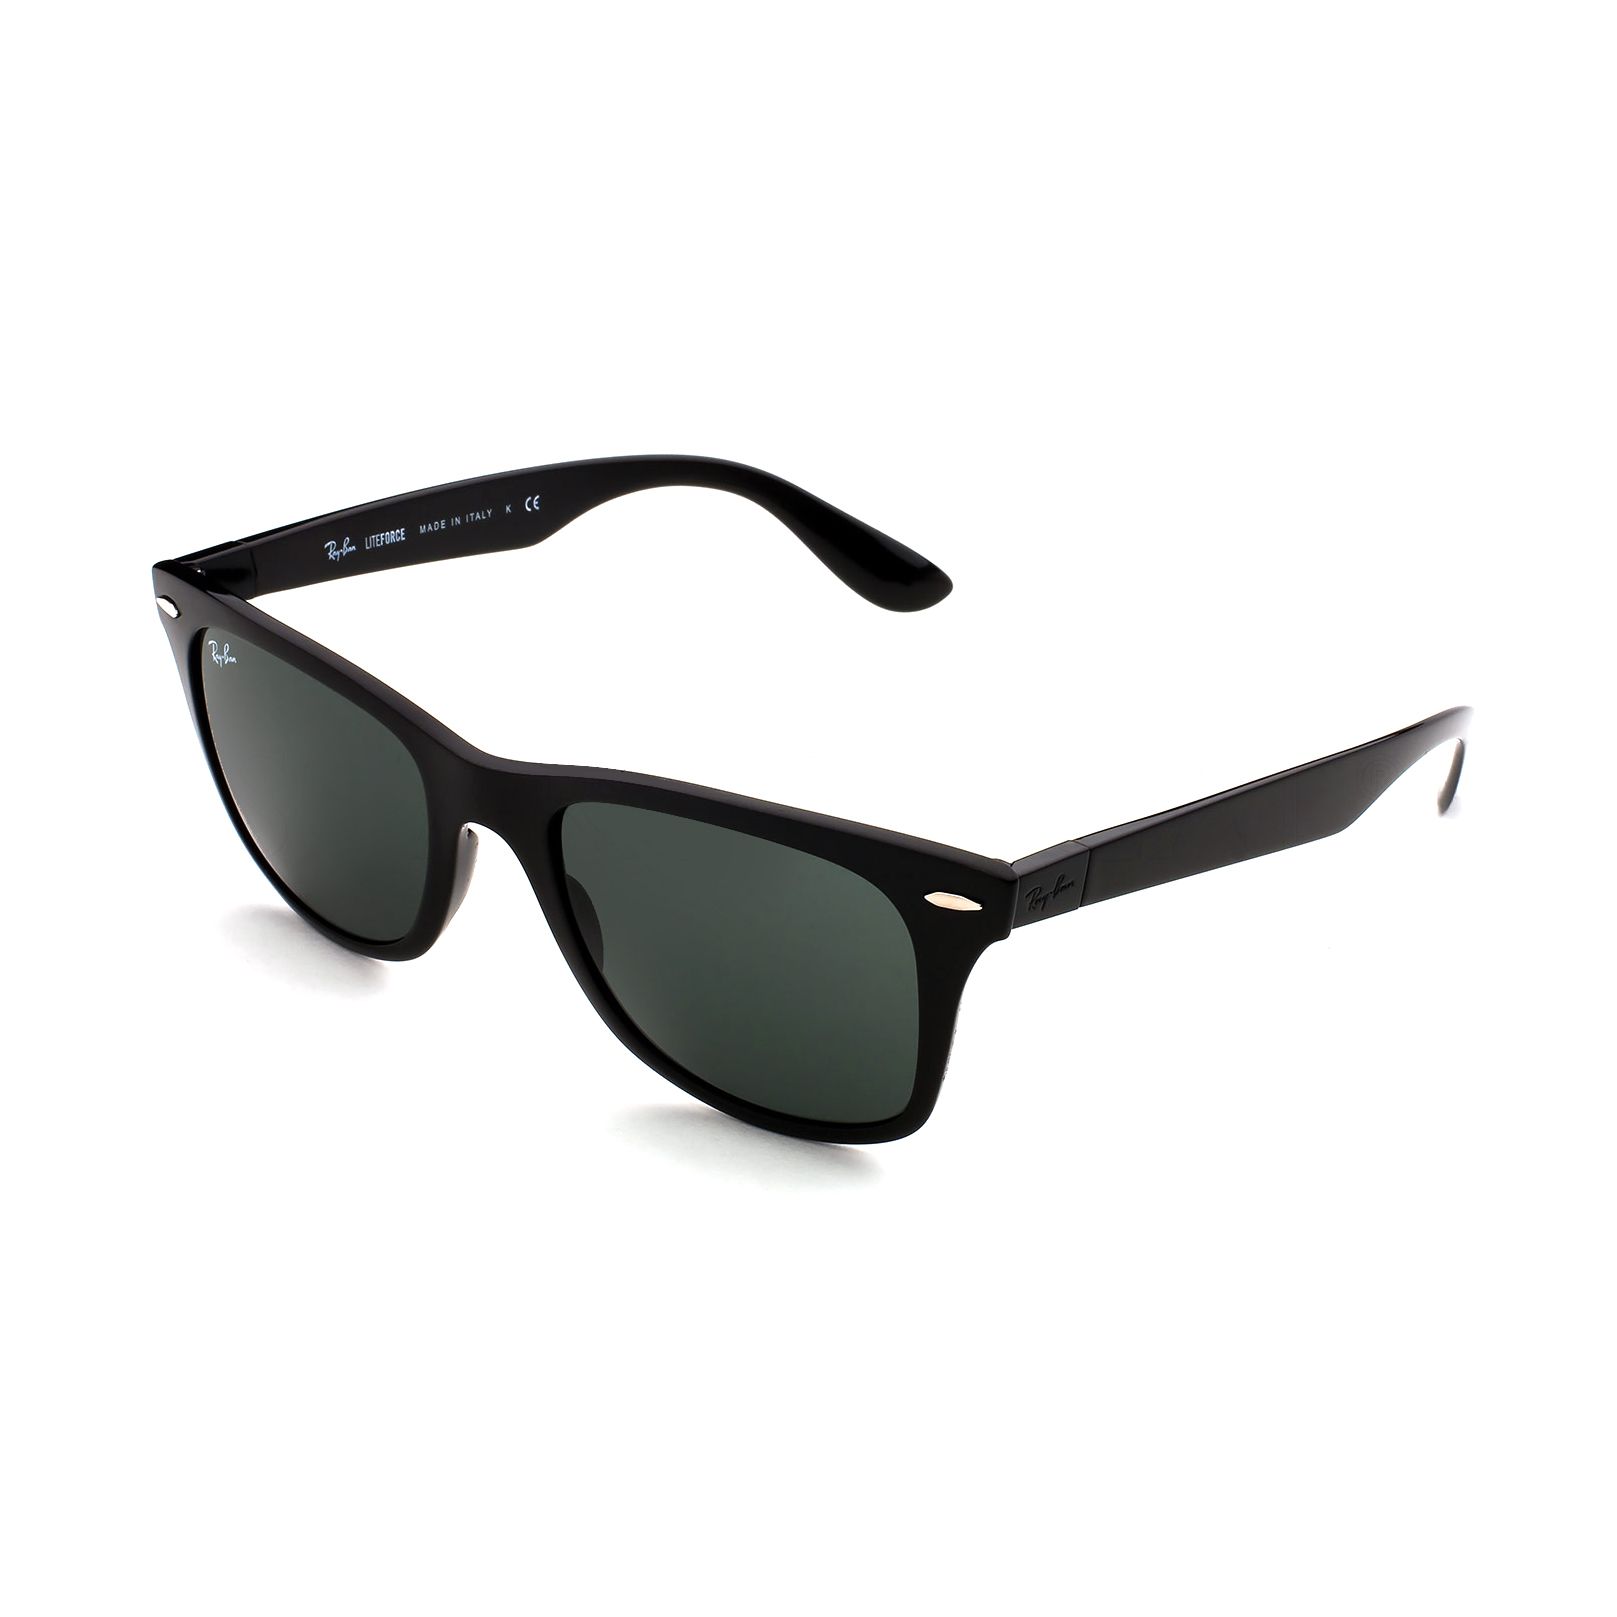 RB4195 Square Sunglasses 601 71 - size 52